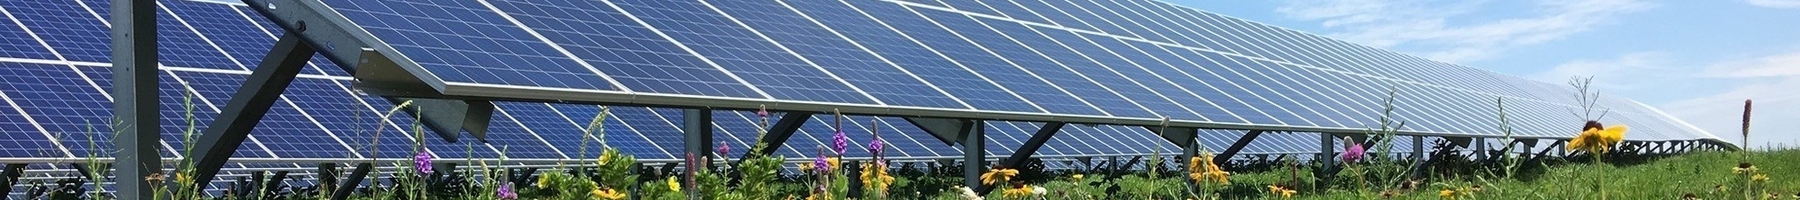 solar panels in a pollinator field